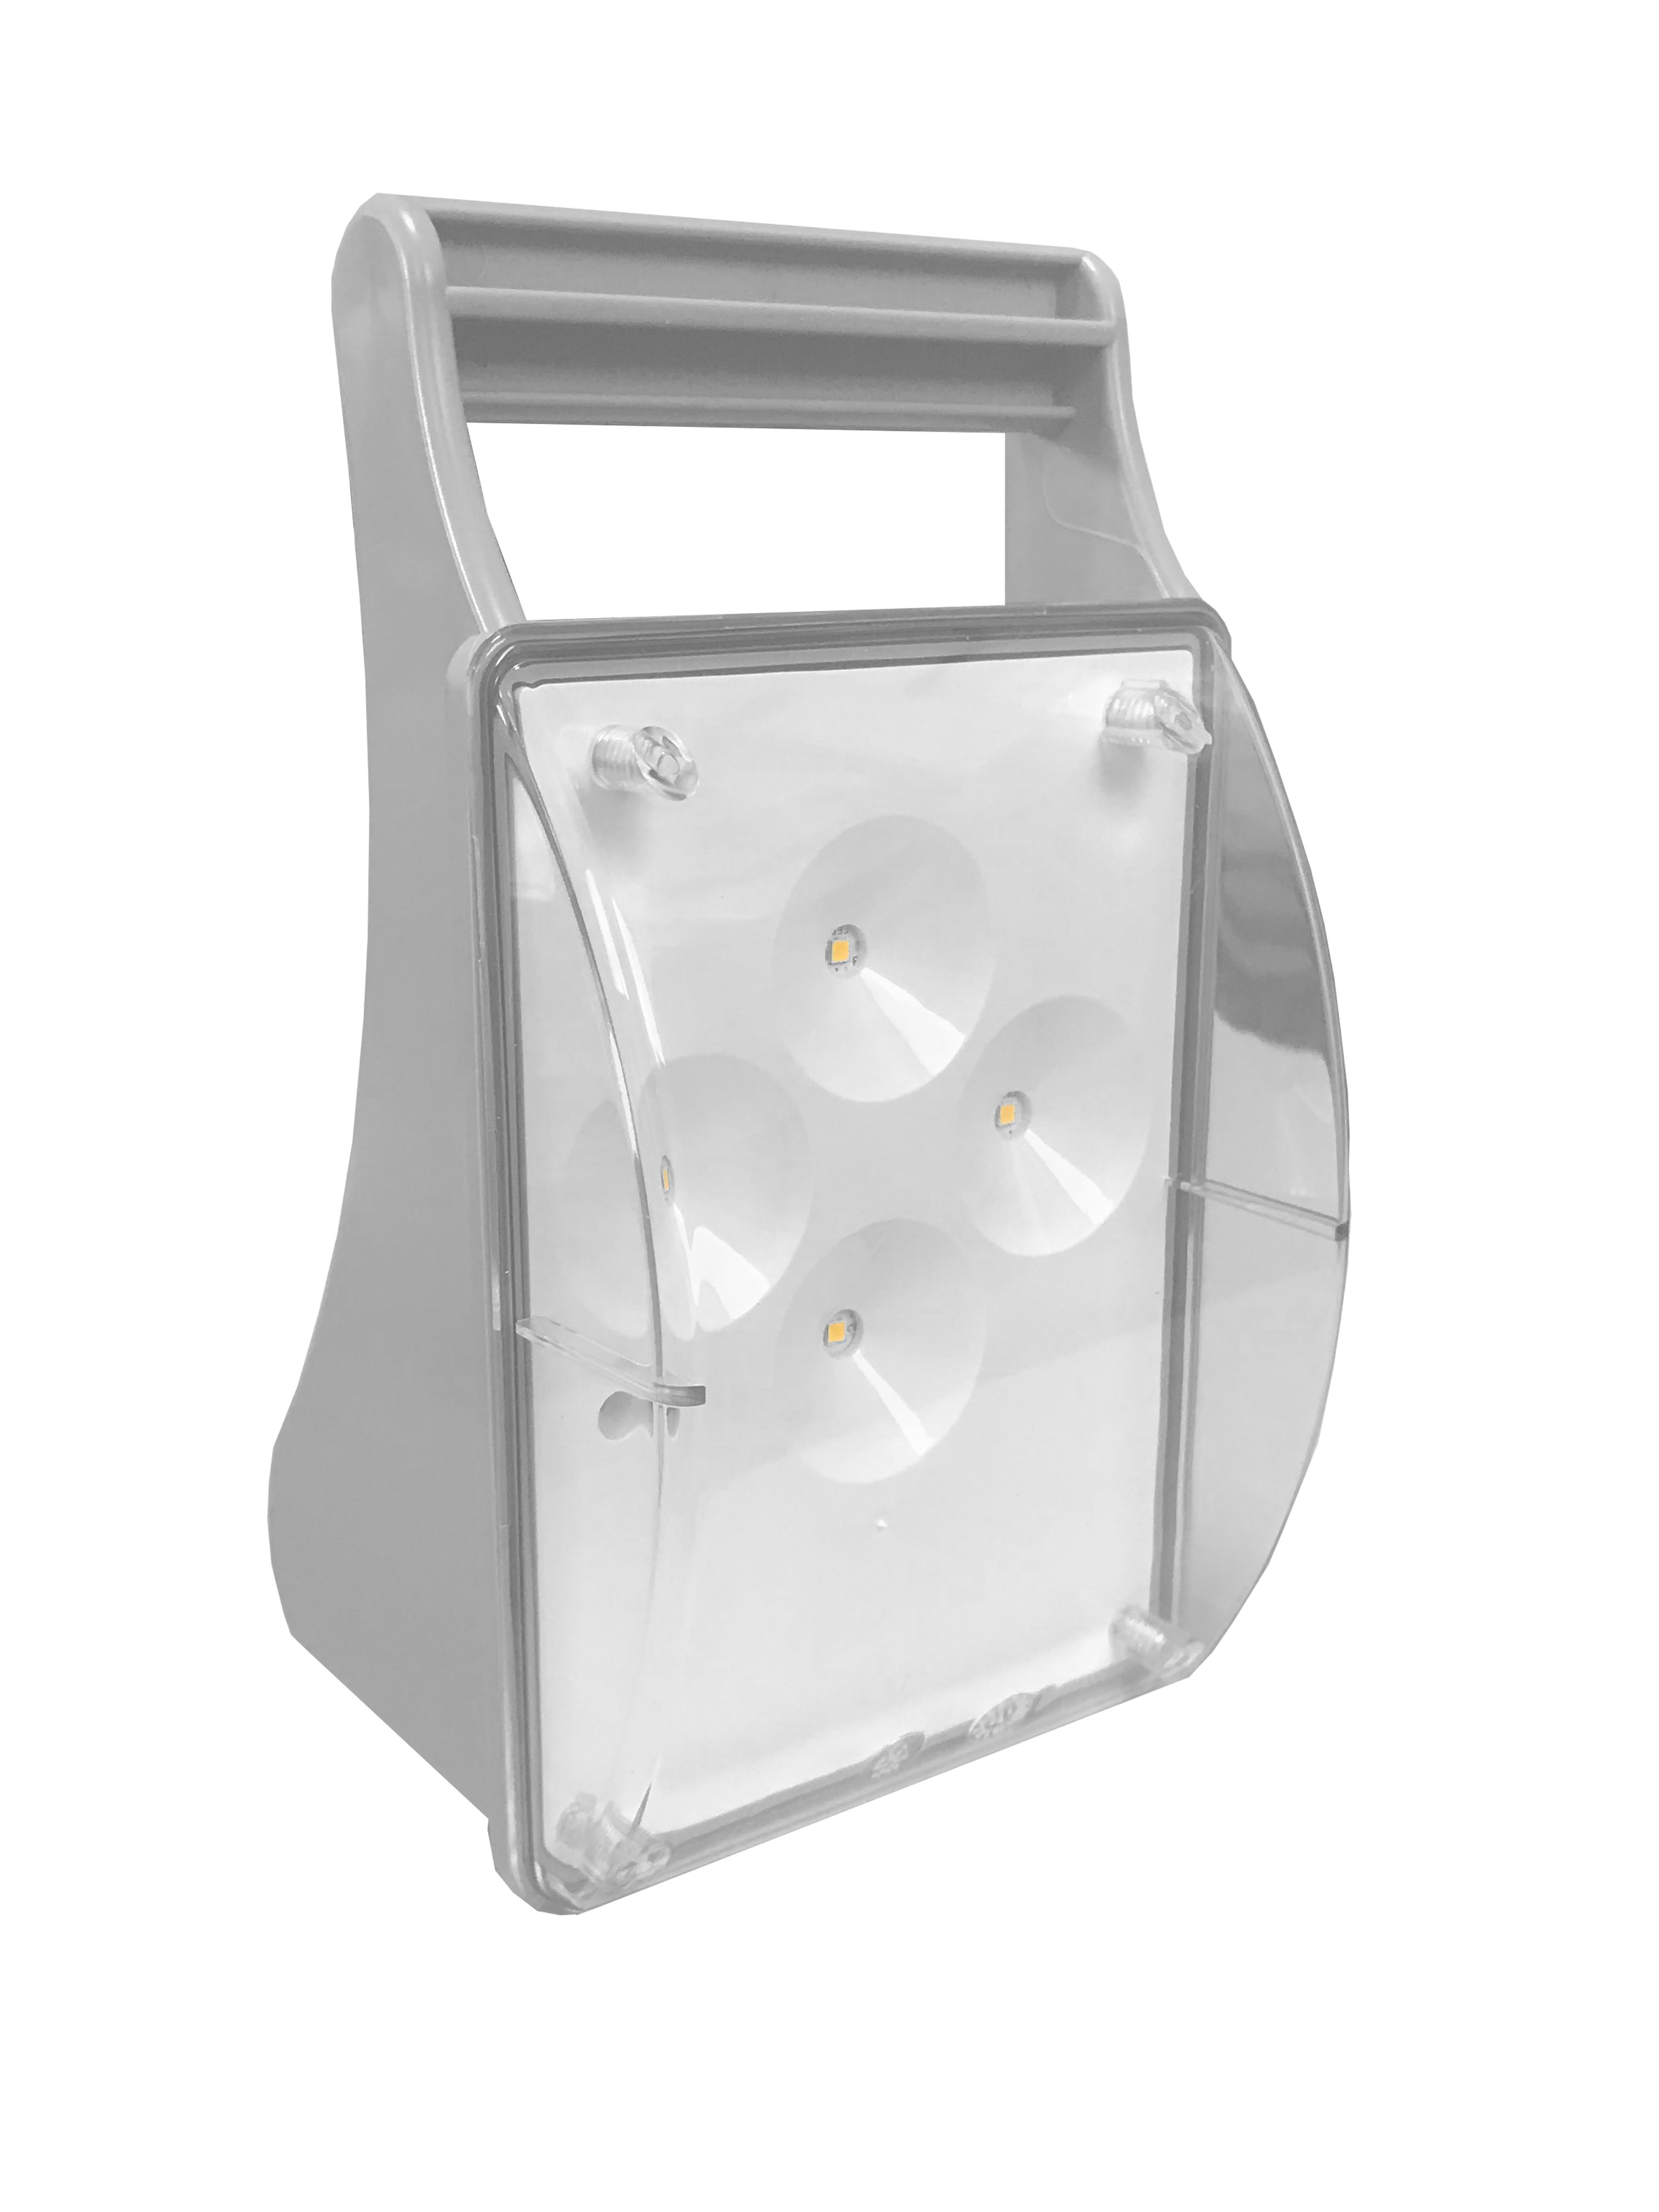 Cooper Securite - LP 50 LED Lampe Portable - Type Locaux Techniques.